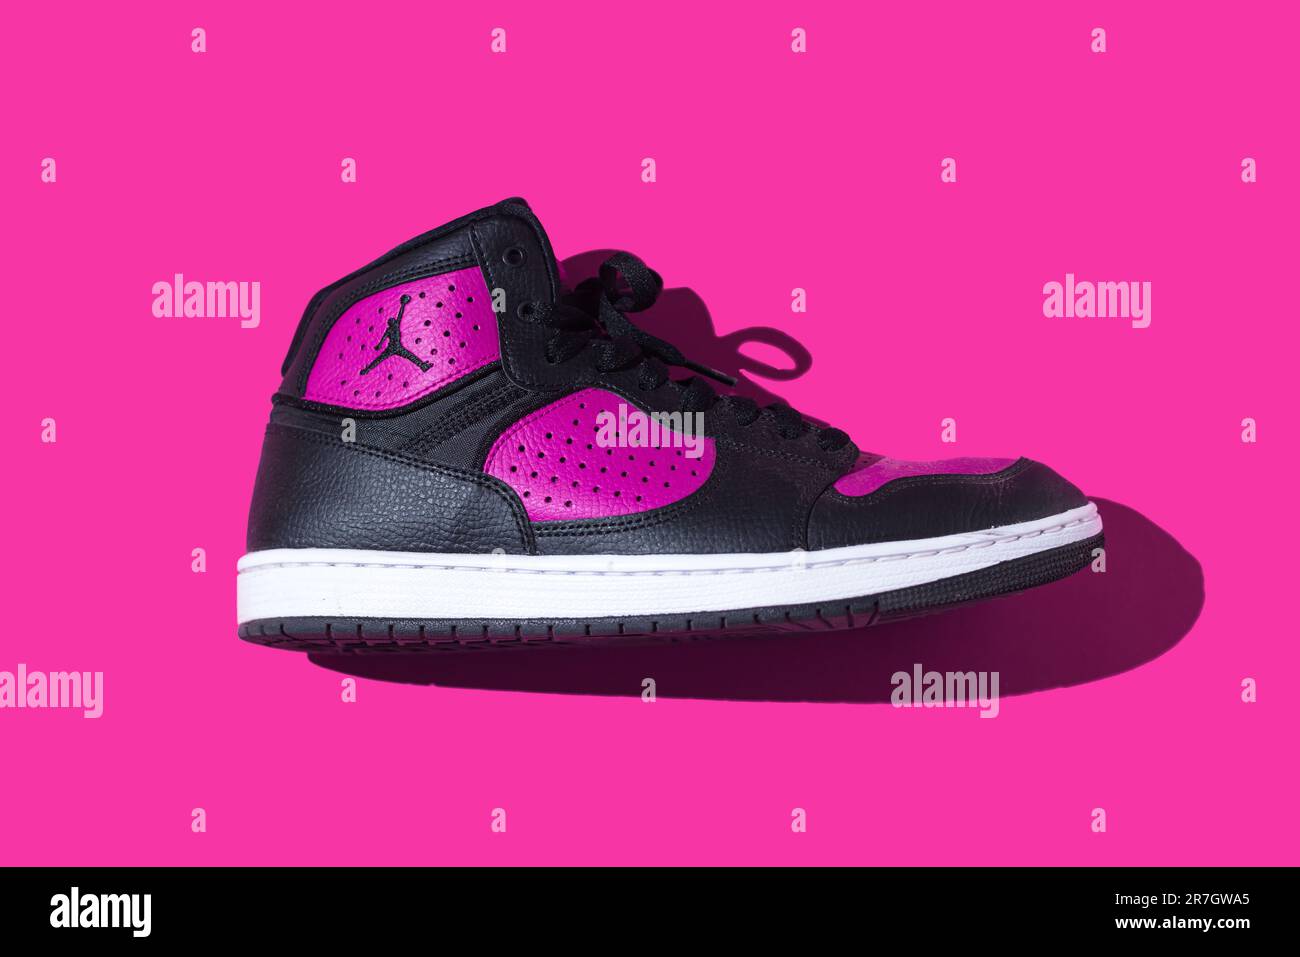 Zapatos NIKE Jordan Access negros y morados sobre un fondo morado. Concepto  de sneaker, baloncesto, retro, michael jordan, moda, colección, casual  Fotografía de stock - Alamy